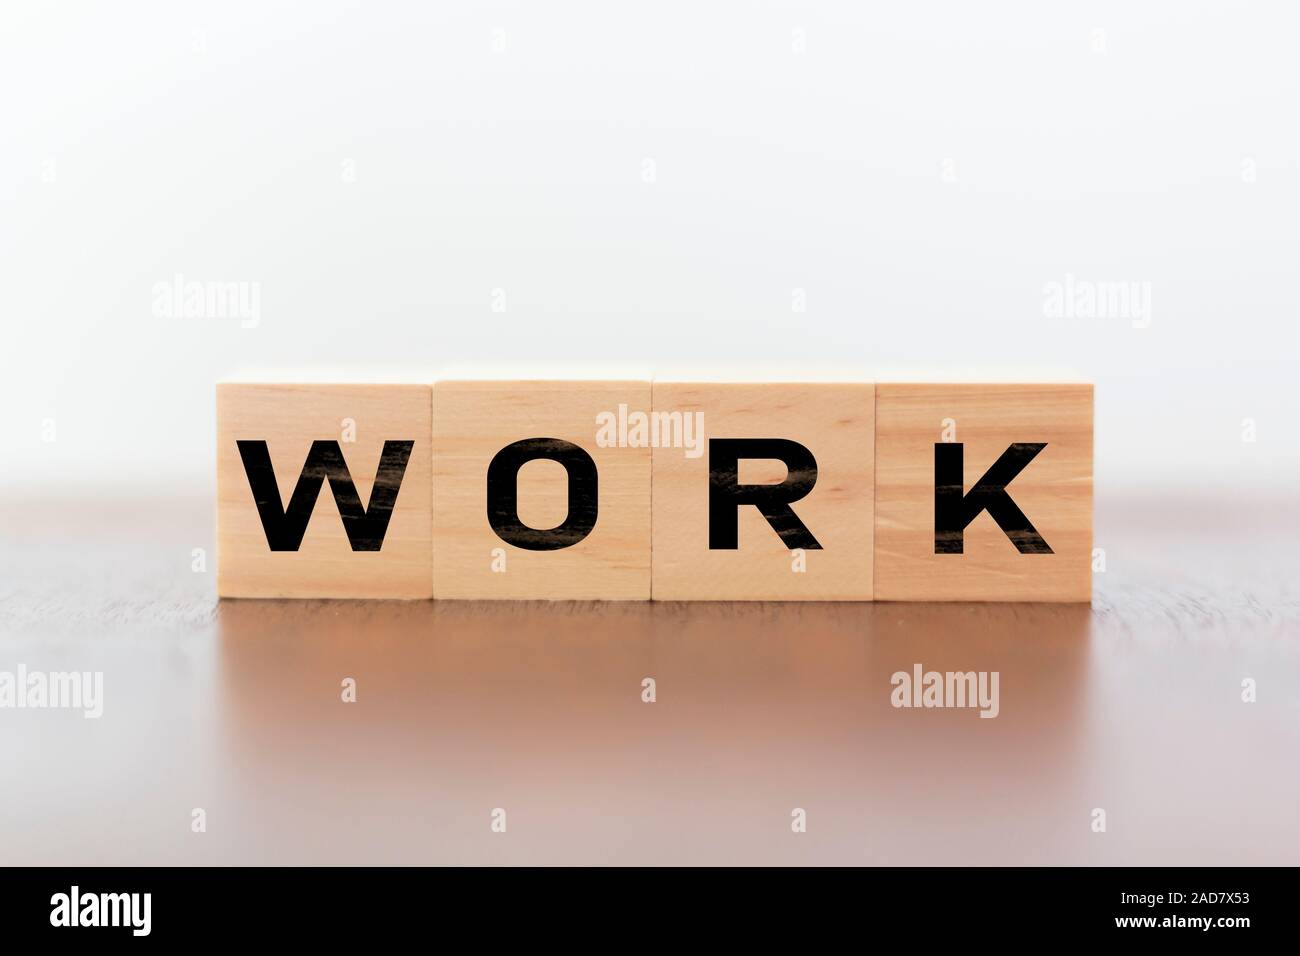 Work word written on wooden cubes Stock Photo